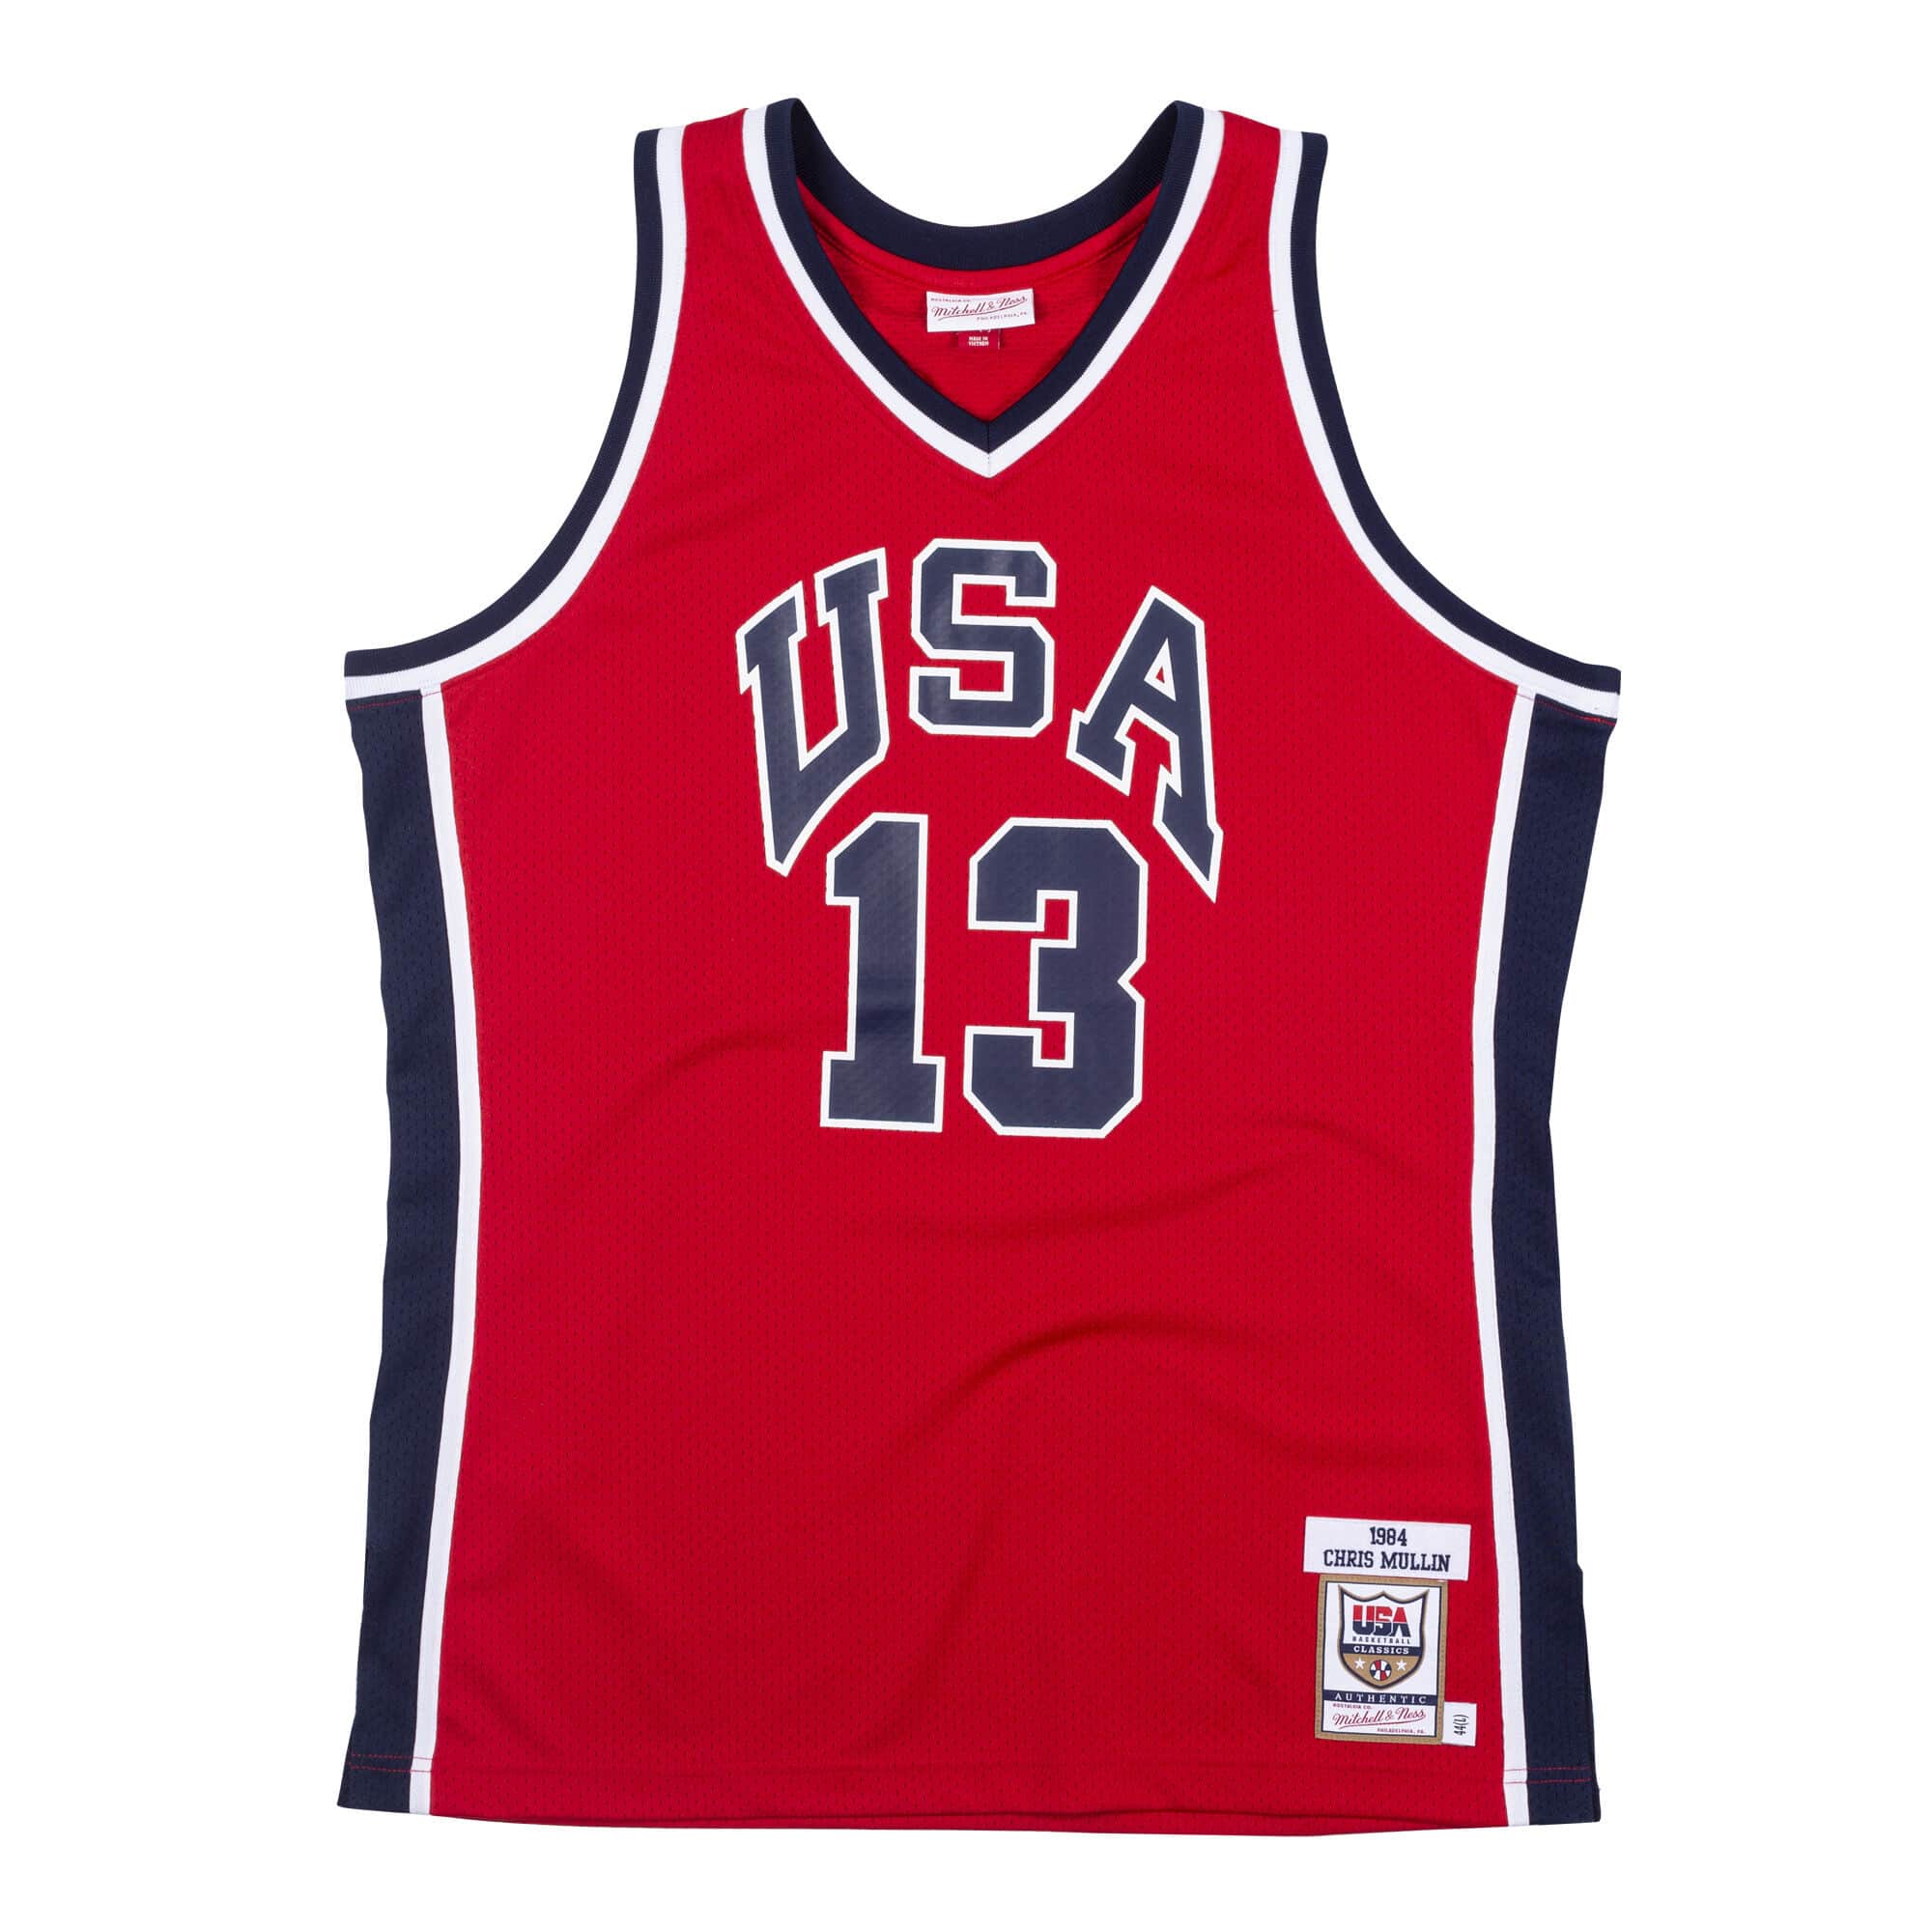 Jersey Team USA 1984 Chris Mullin